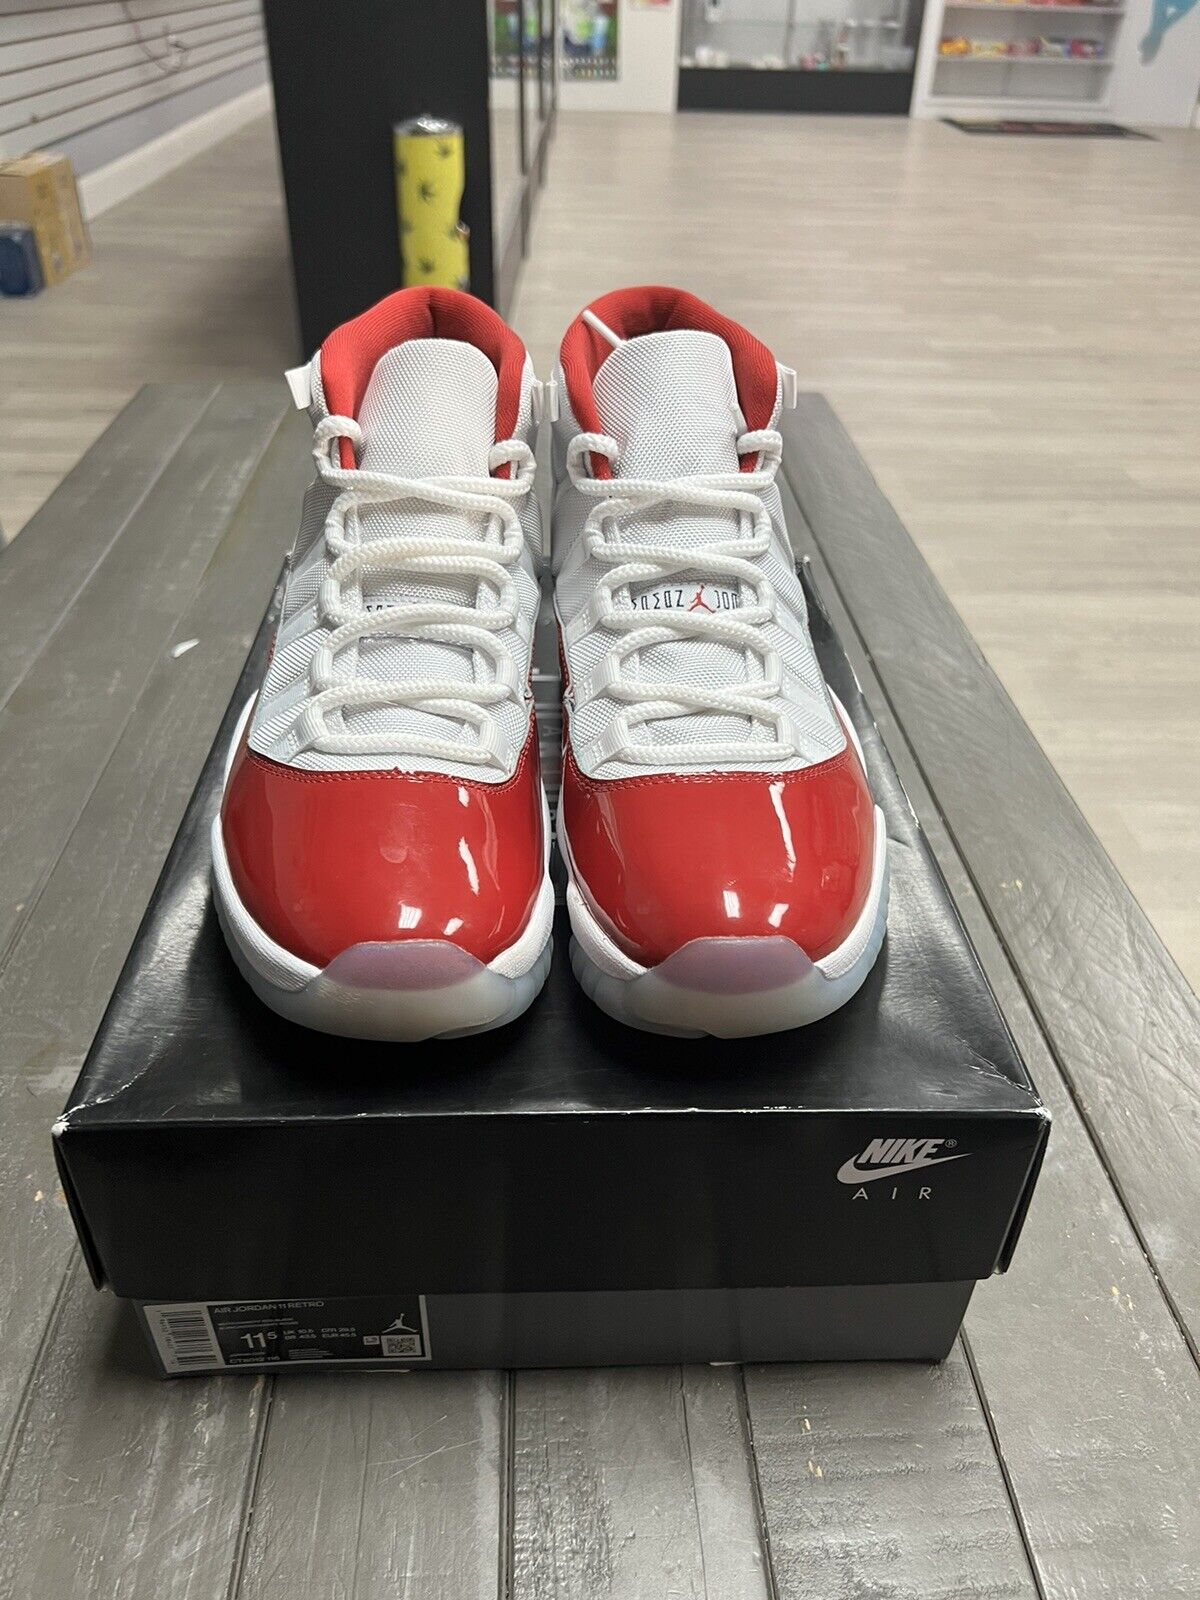 Size 11.5 - Jordan 11 Retro High Cherry